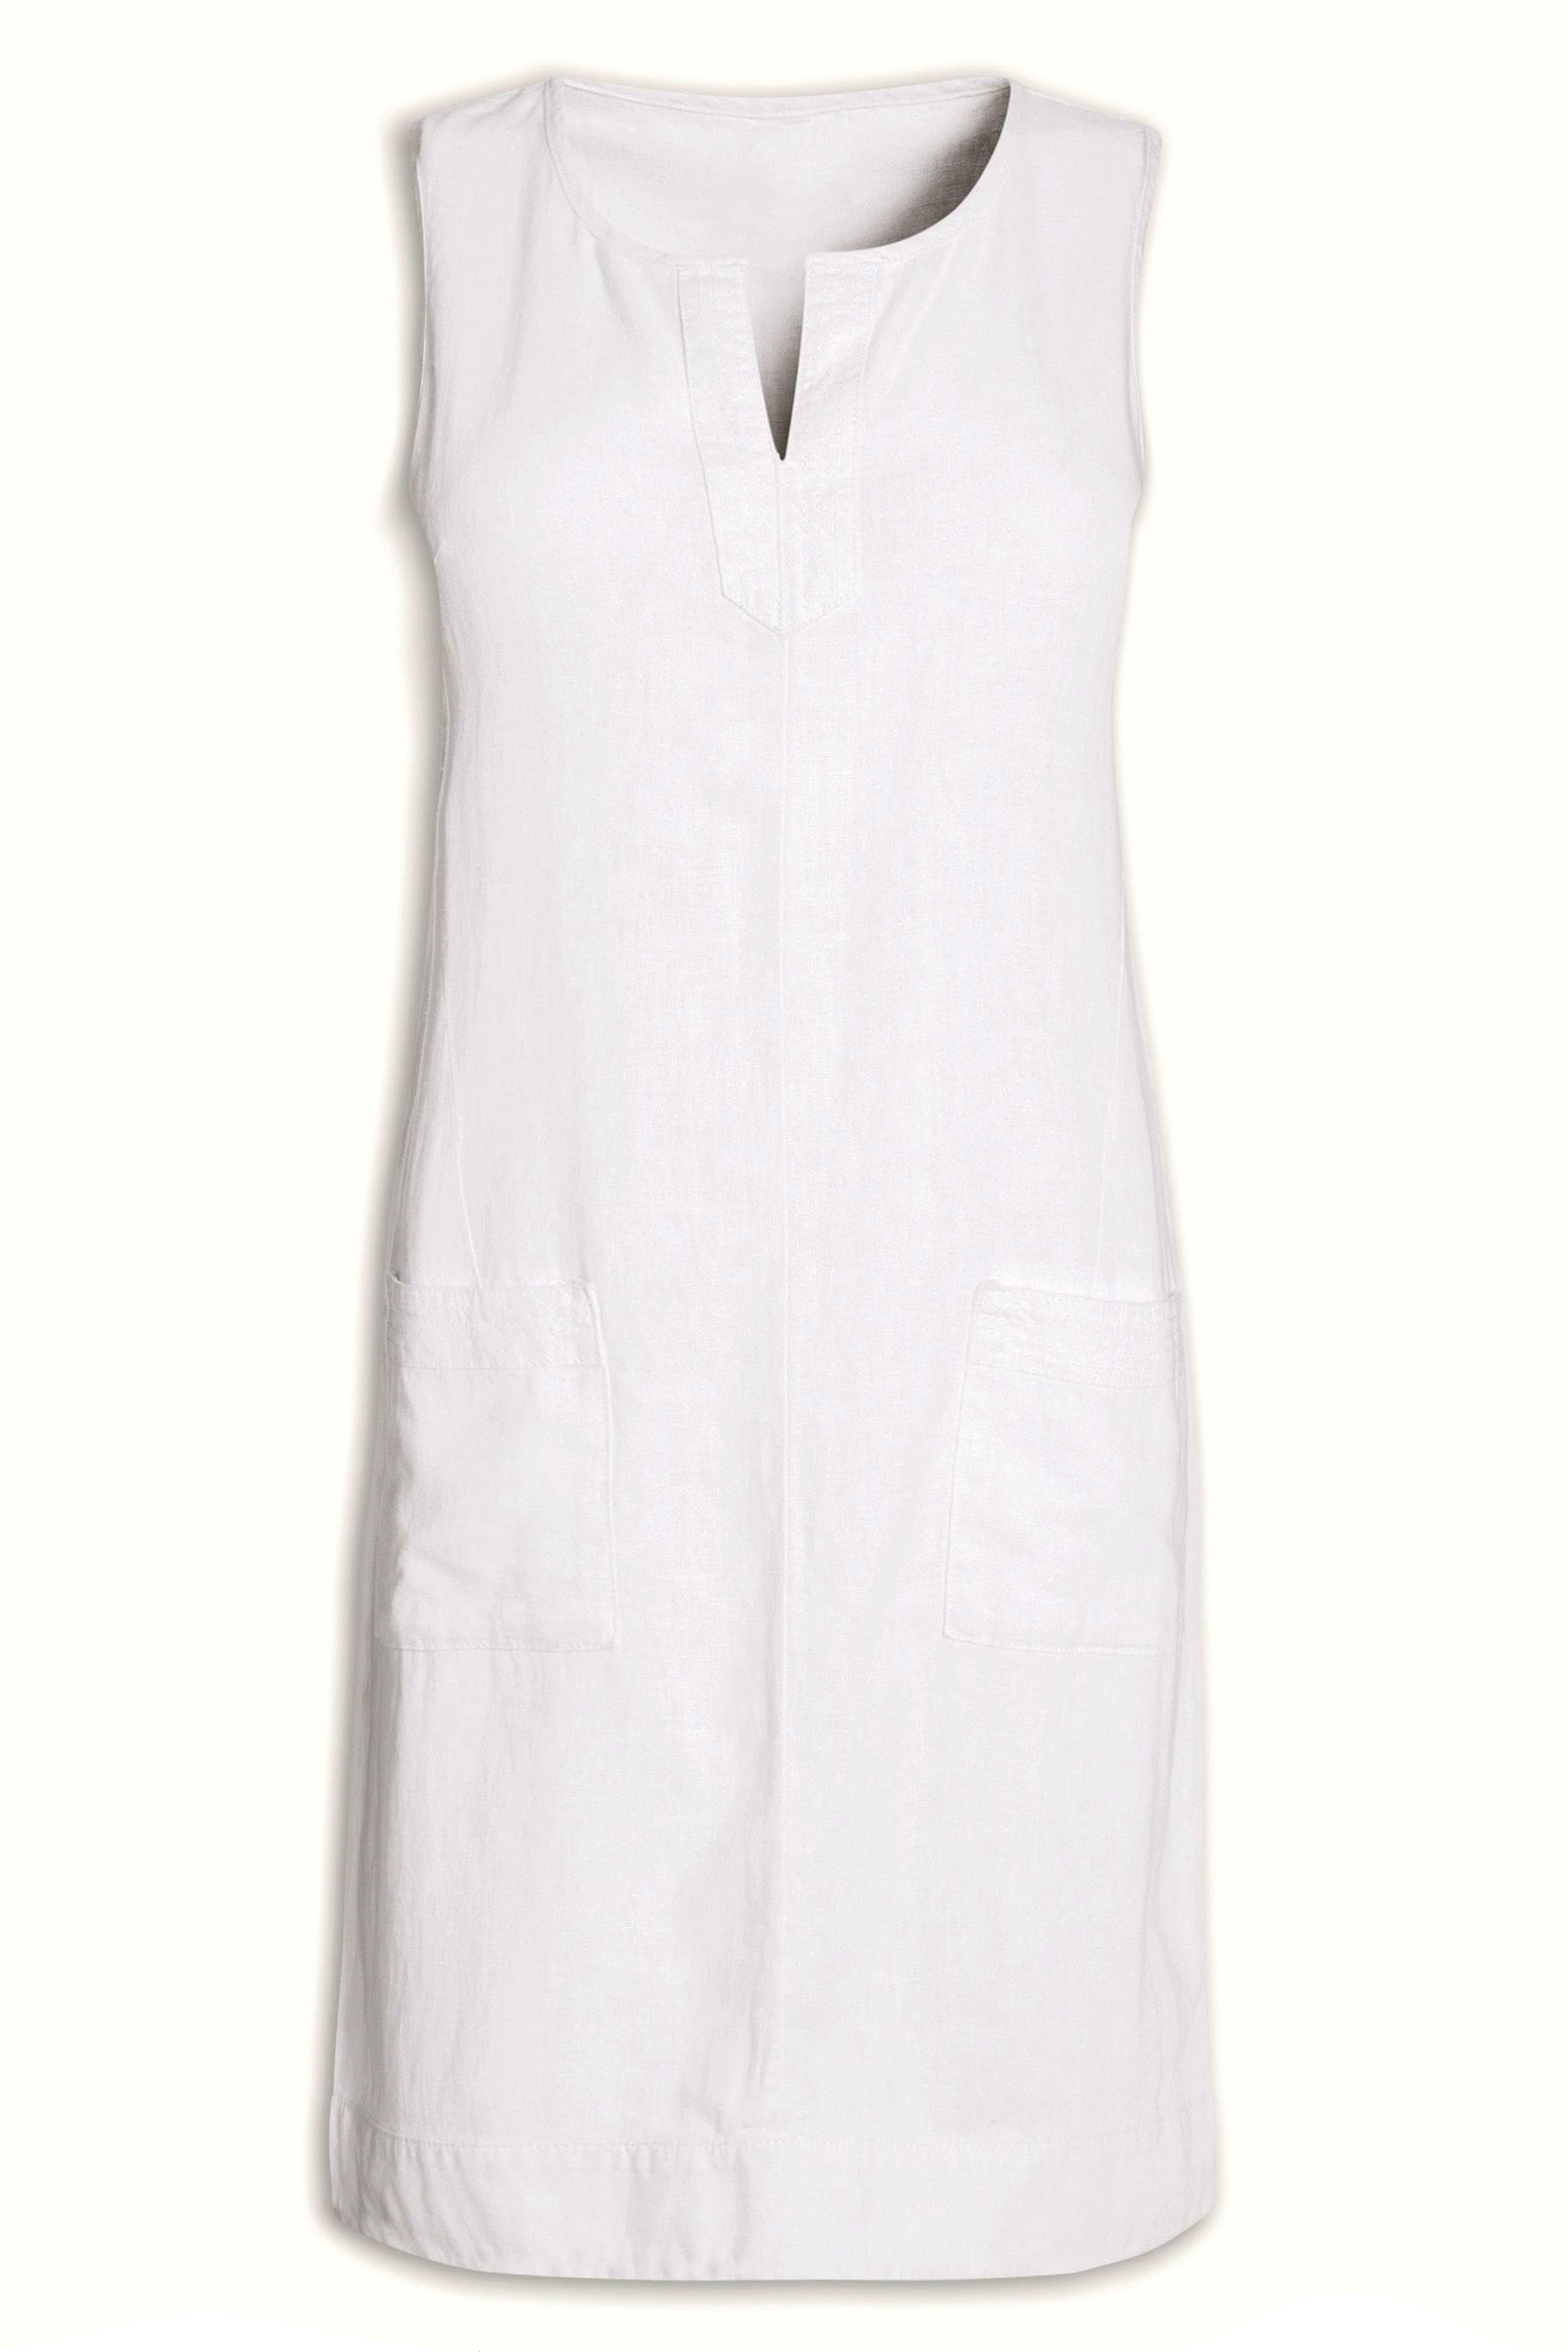 N3xt WHITE Linen Blend Sleeveless Shift Dress - Size 16 to 18